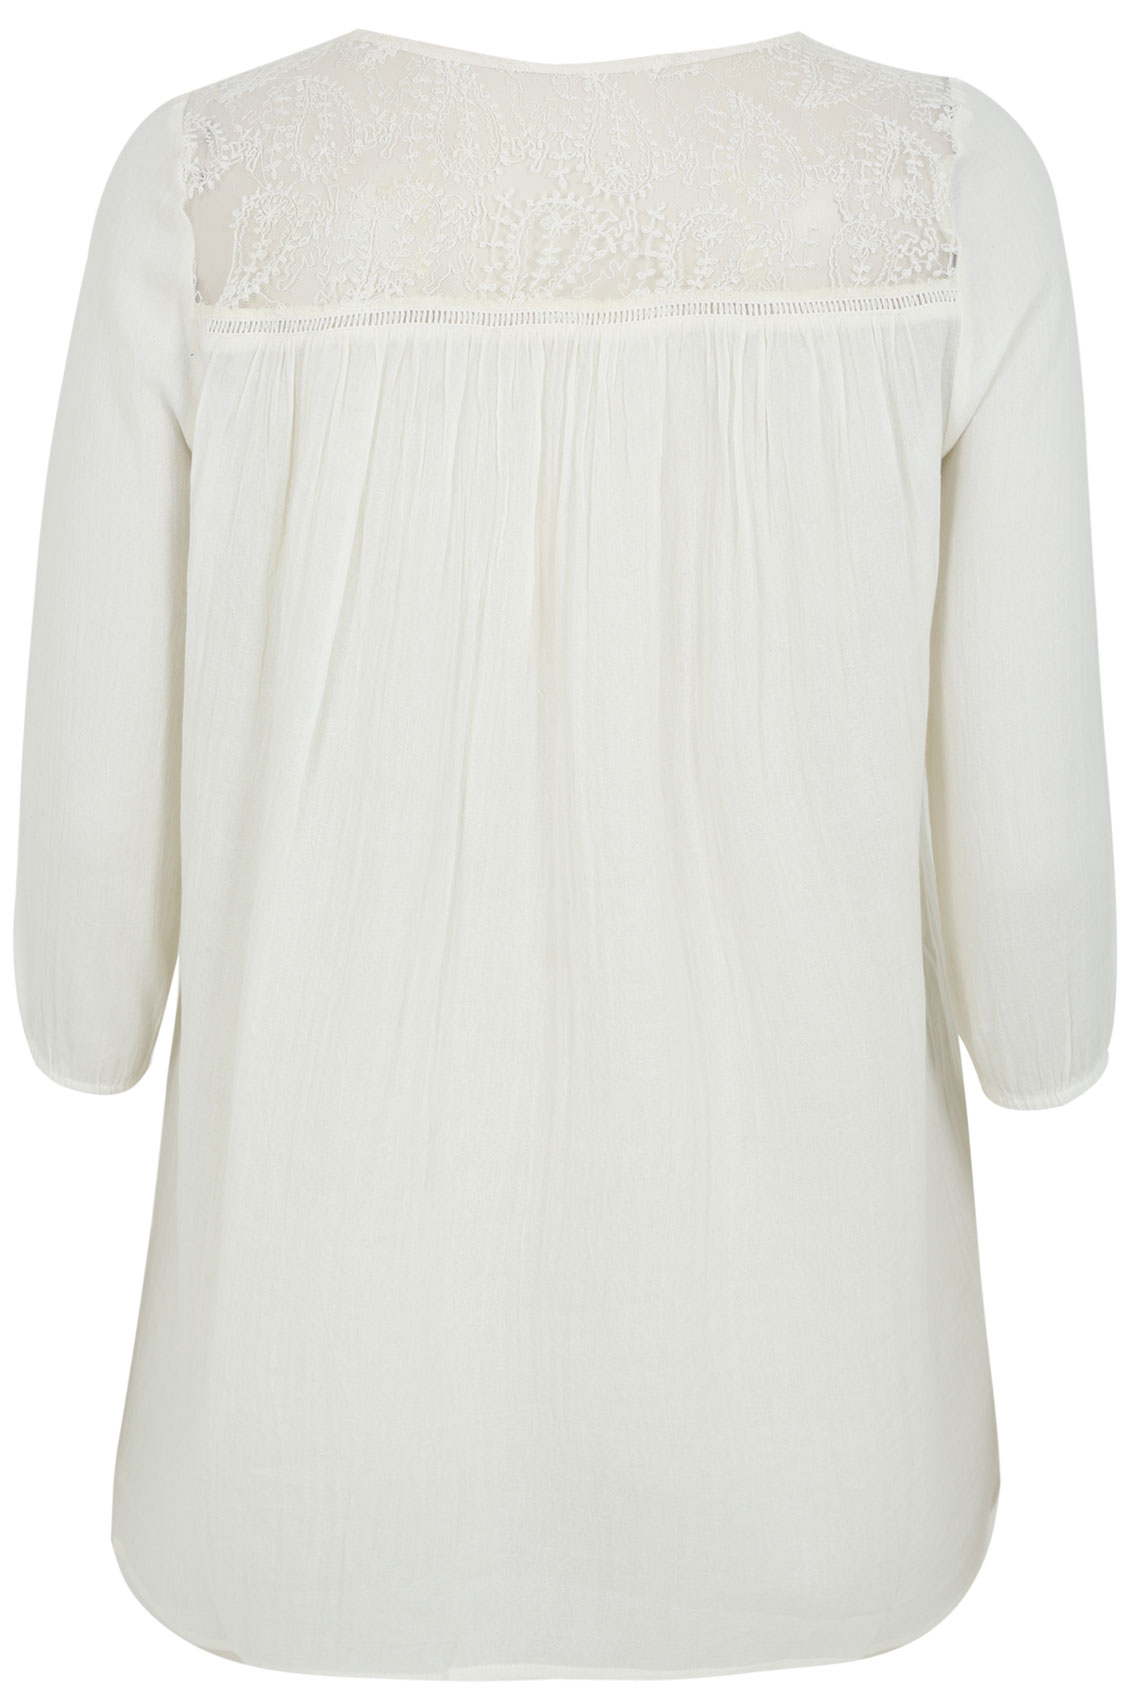 Ivory Sleeved Blouse With Lace Yoke Plus Size 14 to 32